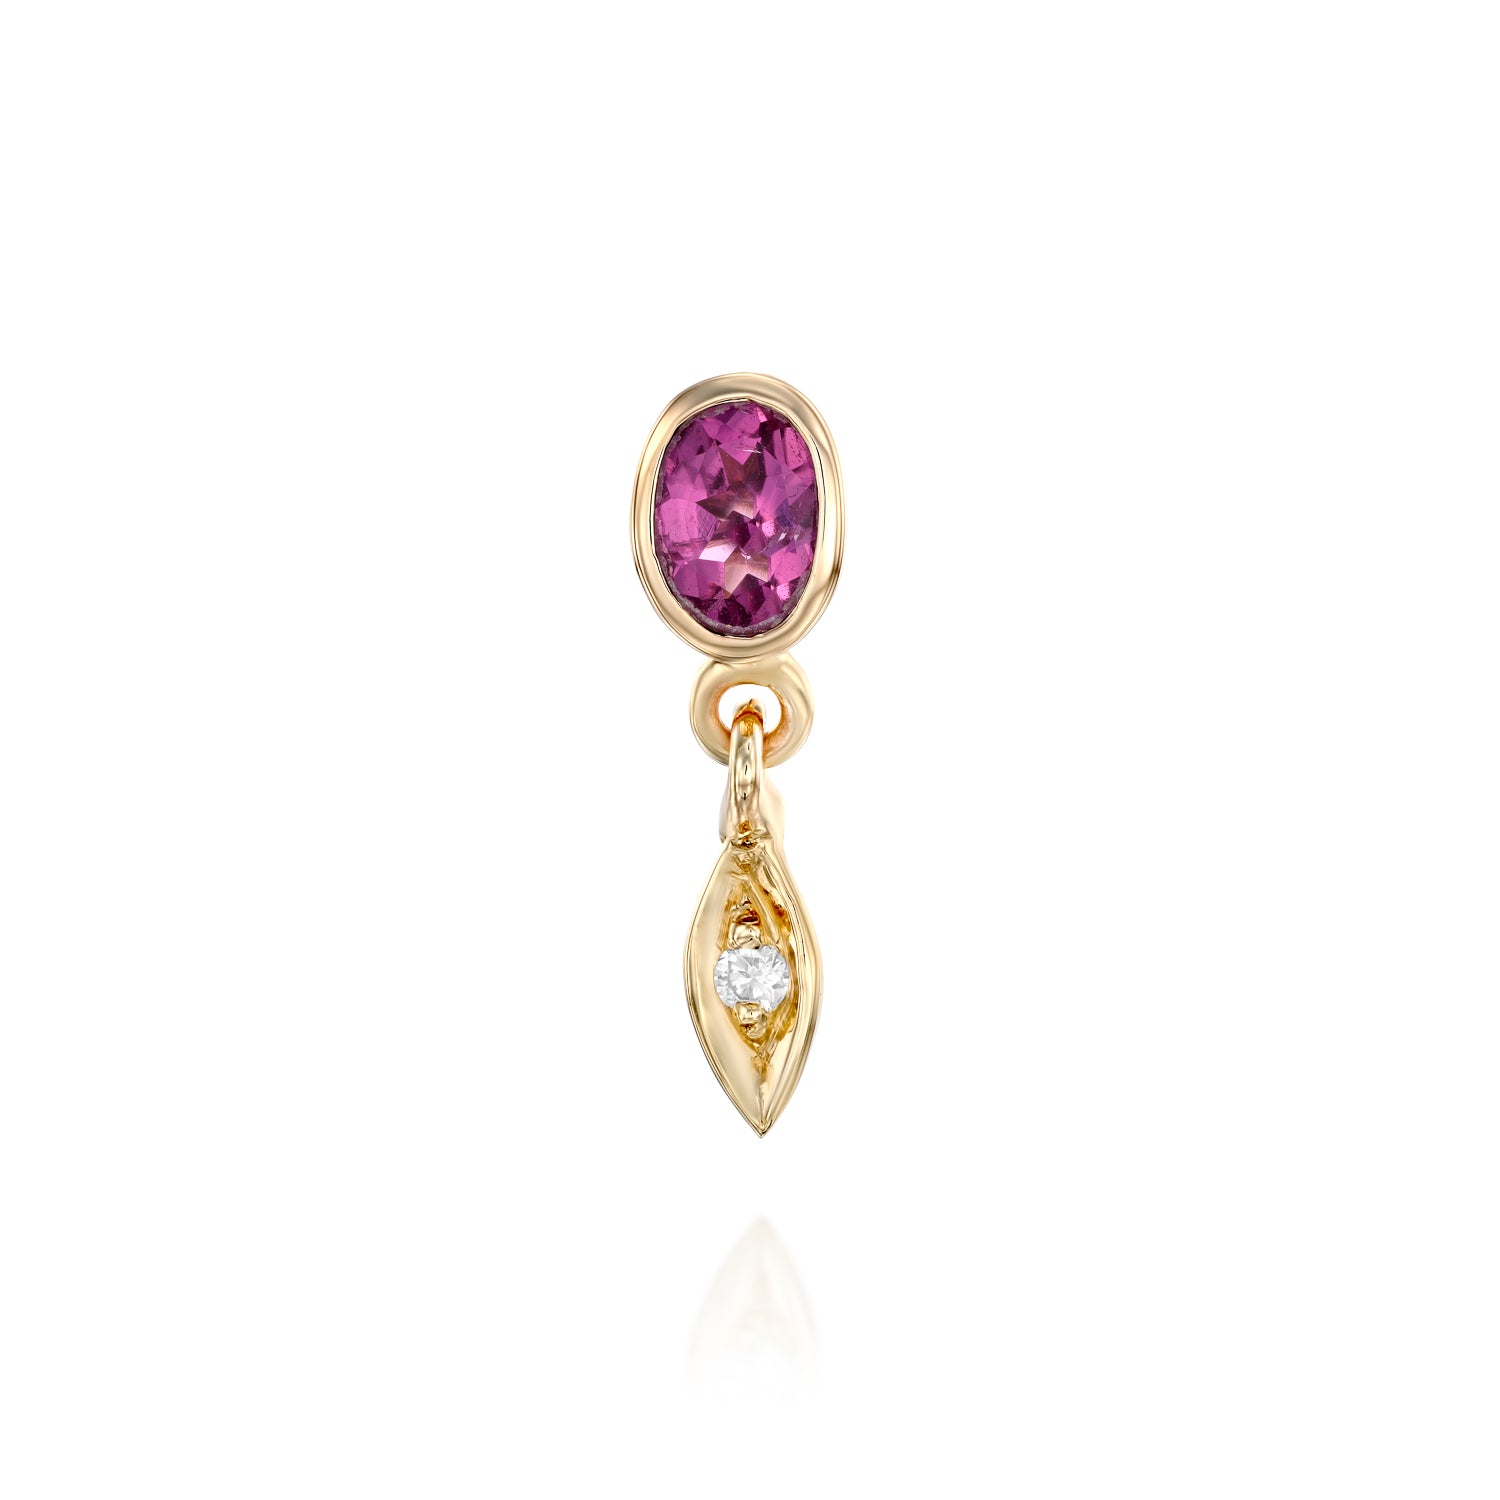 Shakti Earring &amp; Pink Tourmaline  - one of a kind - Danielle Gerber Freedom Jewelry